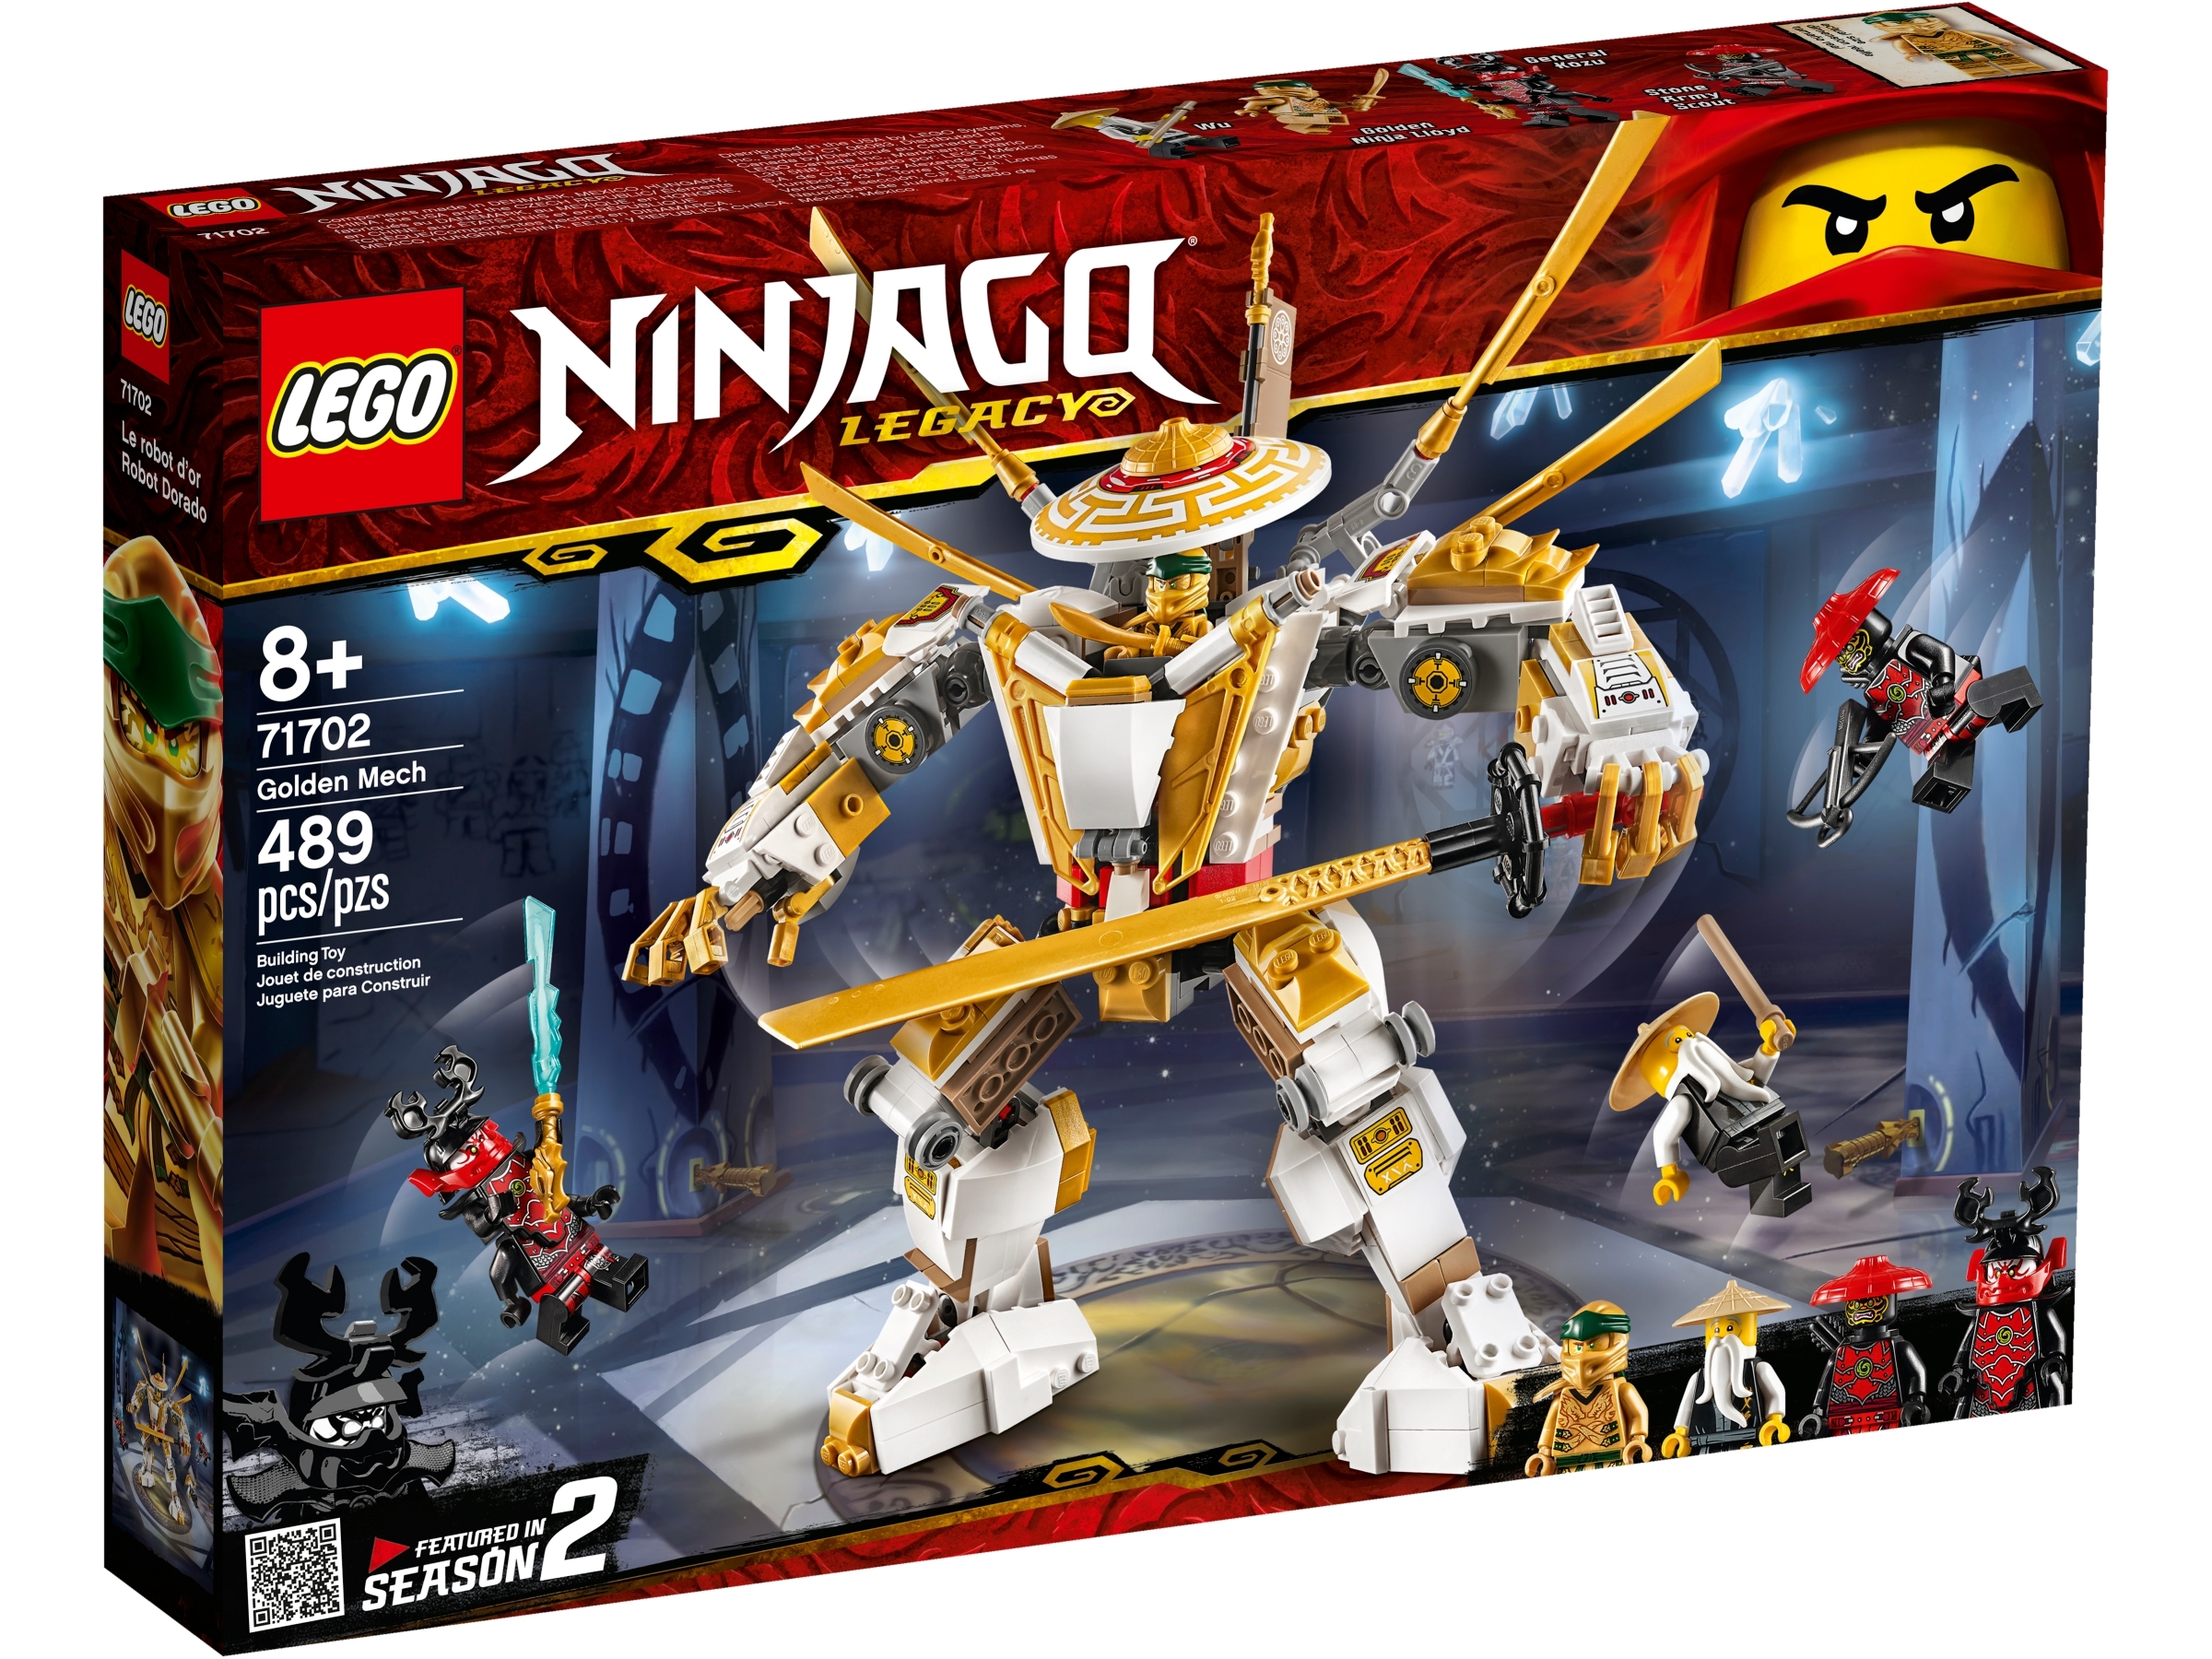 lego ninjago legacy all sets